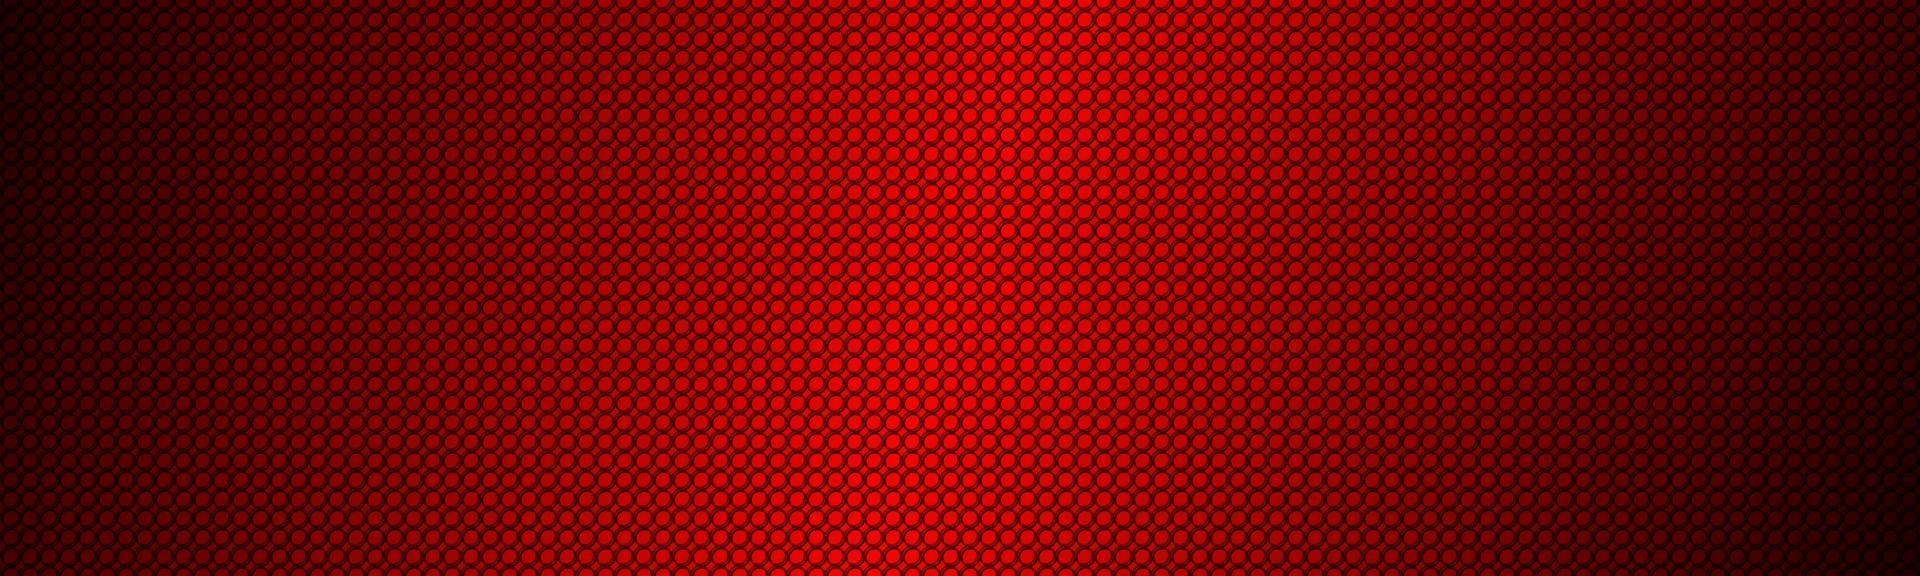 röd abstrakt texturerad cirkelrubrik modern cirkel geometrisk textur bakgrundsmönster banner vektor